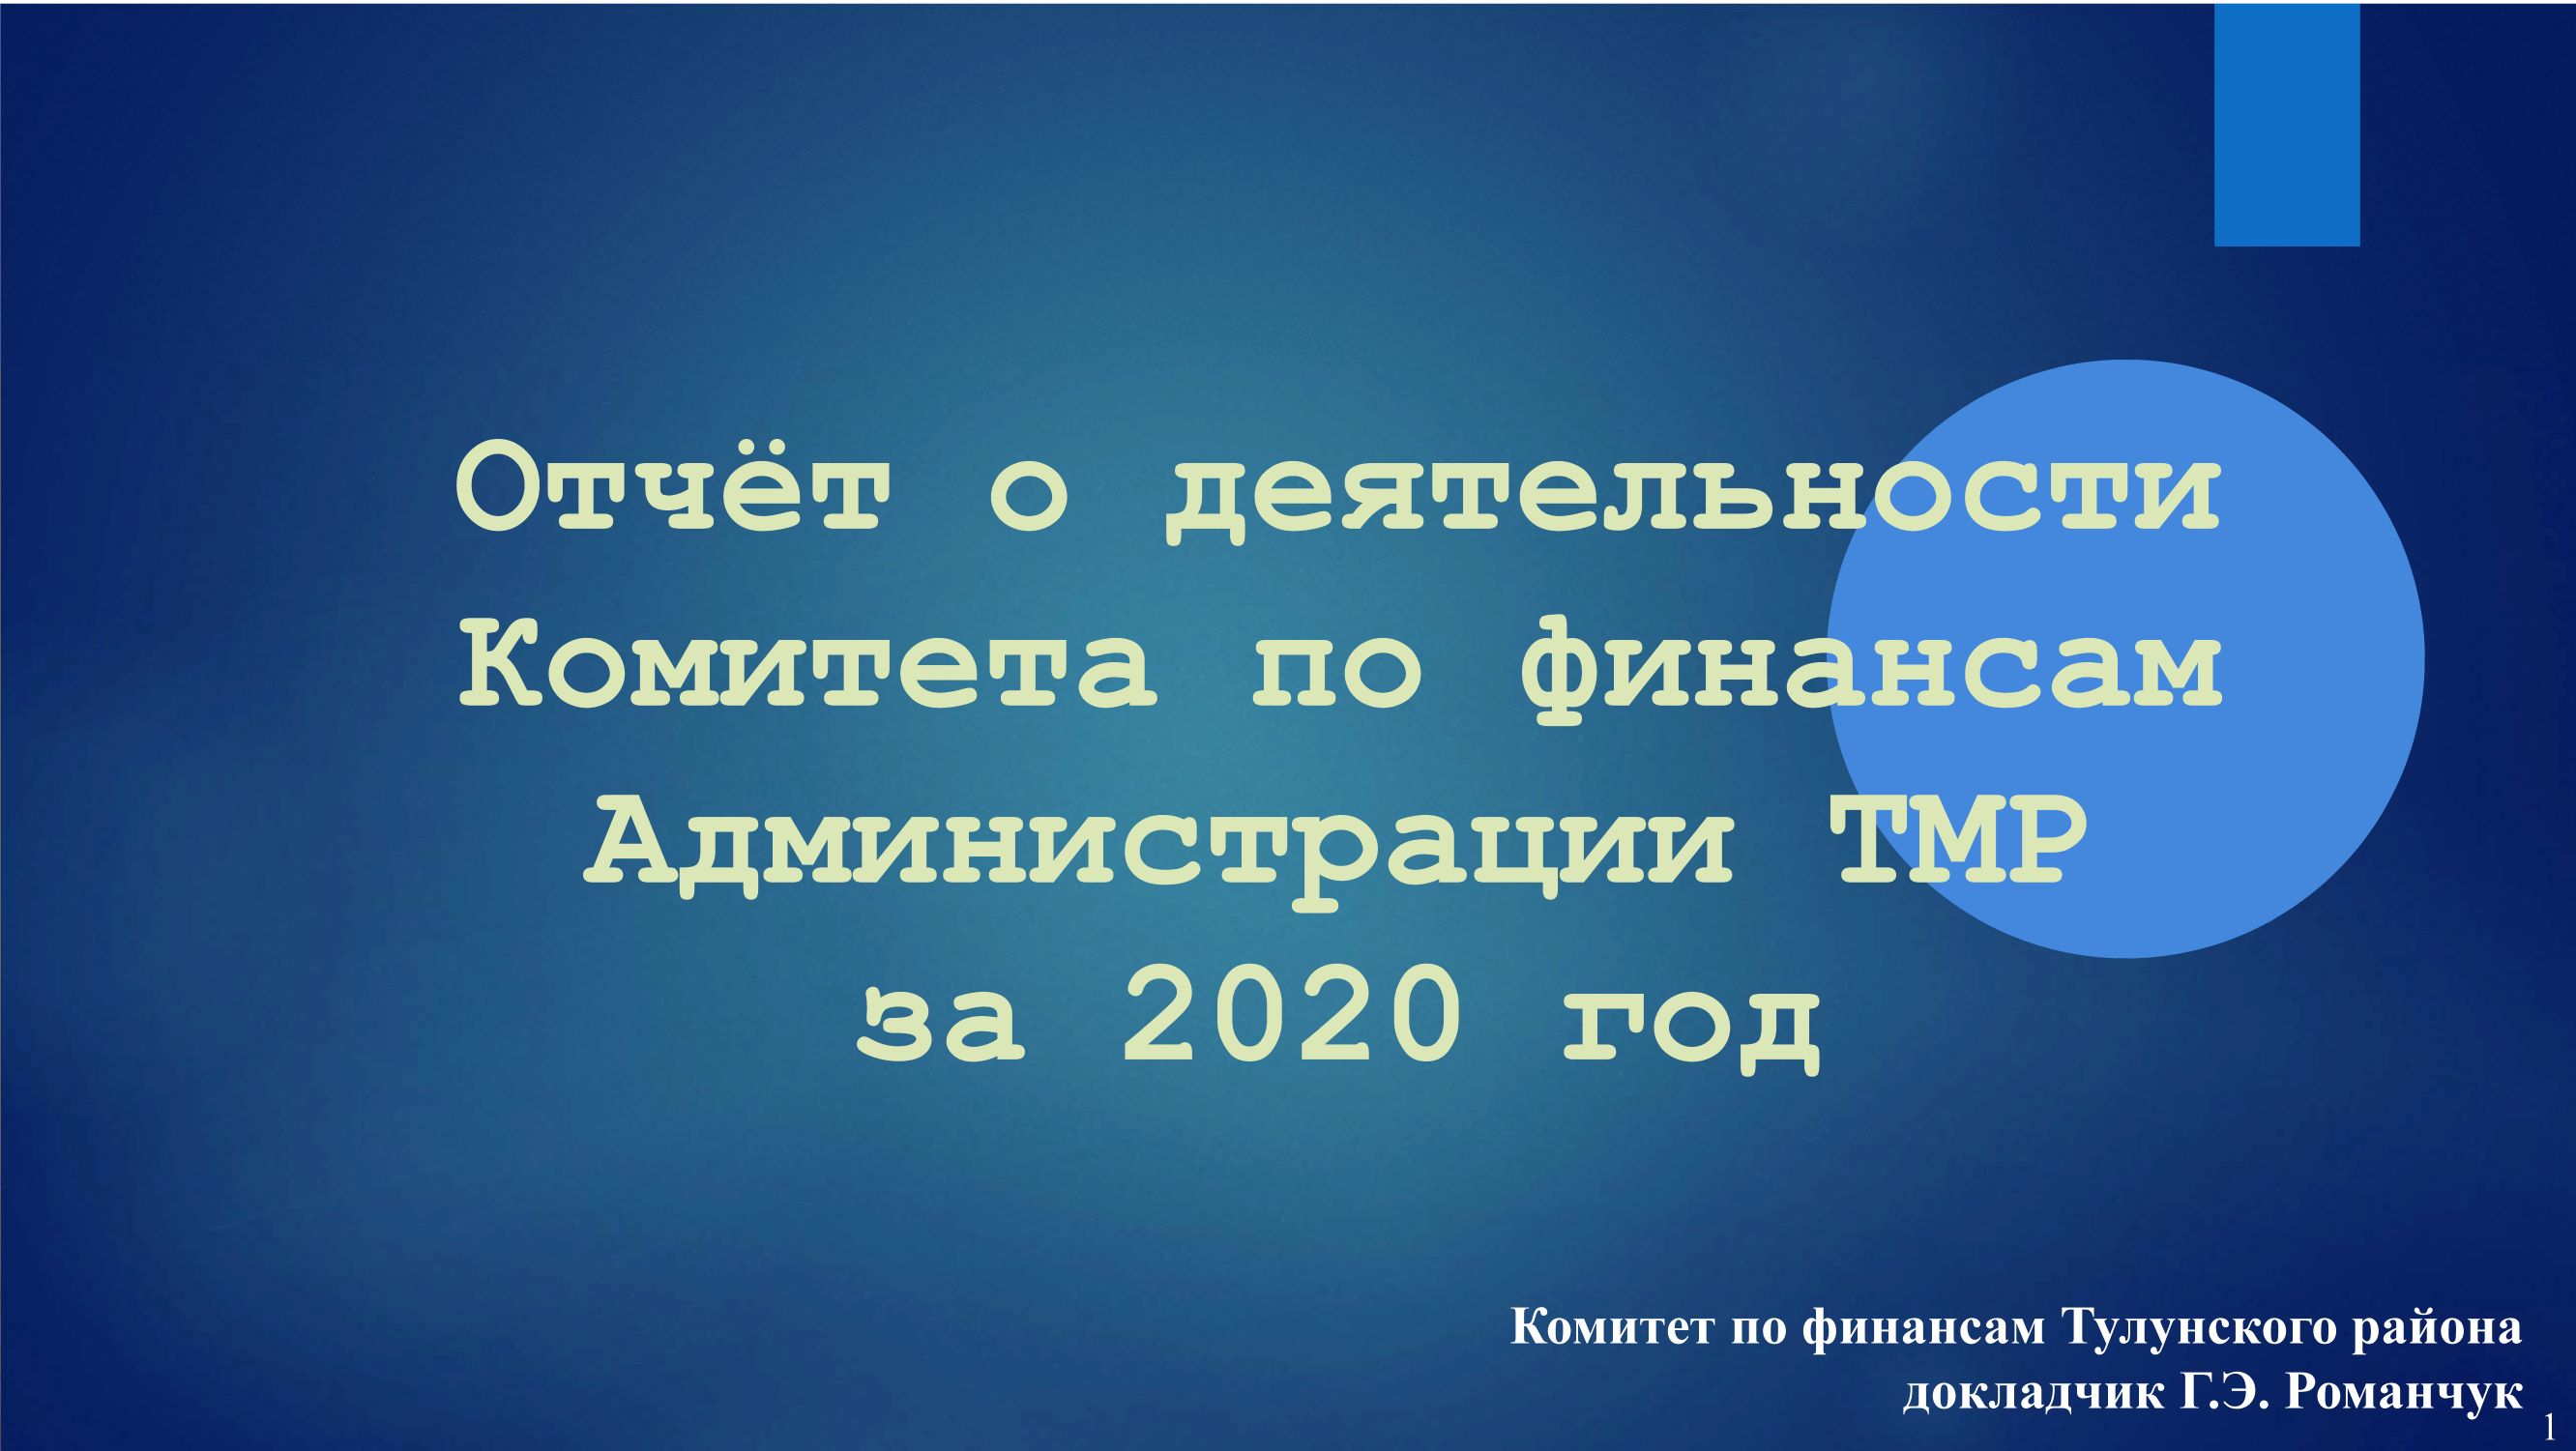 Отчет о деятельности Комитета по финансам Администрации ТМР за 2020 год